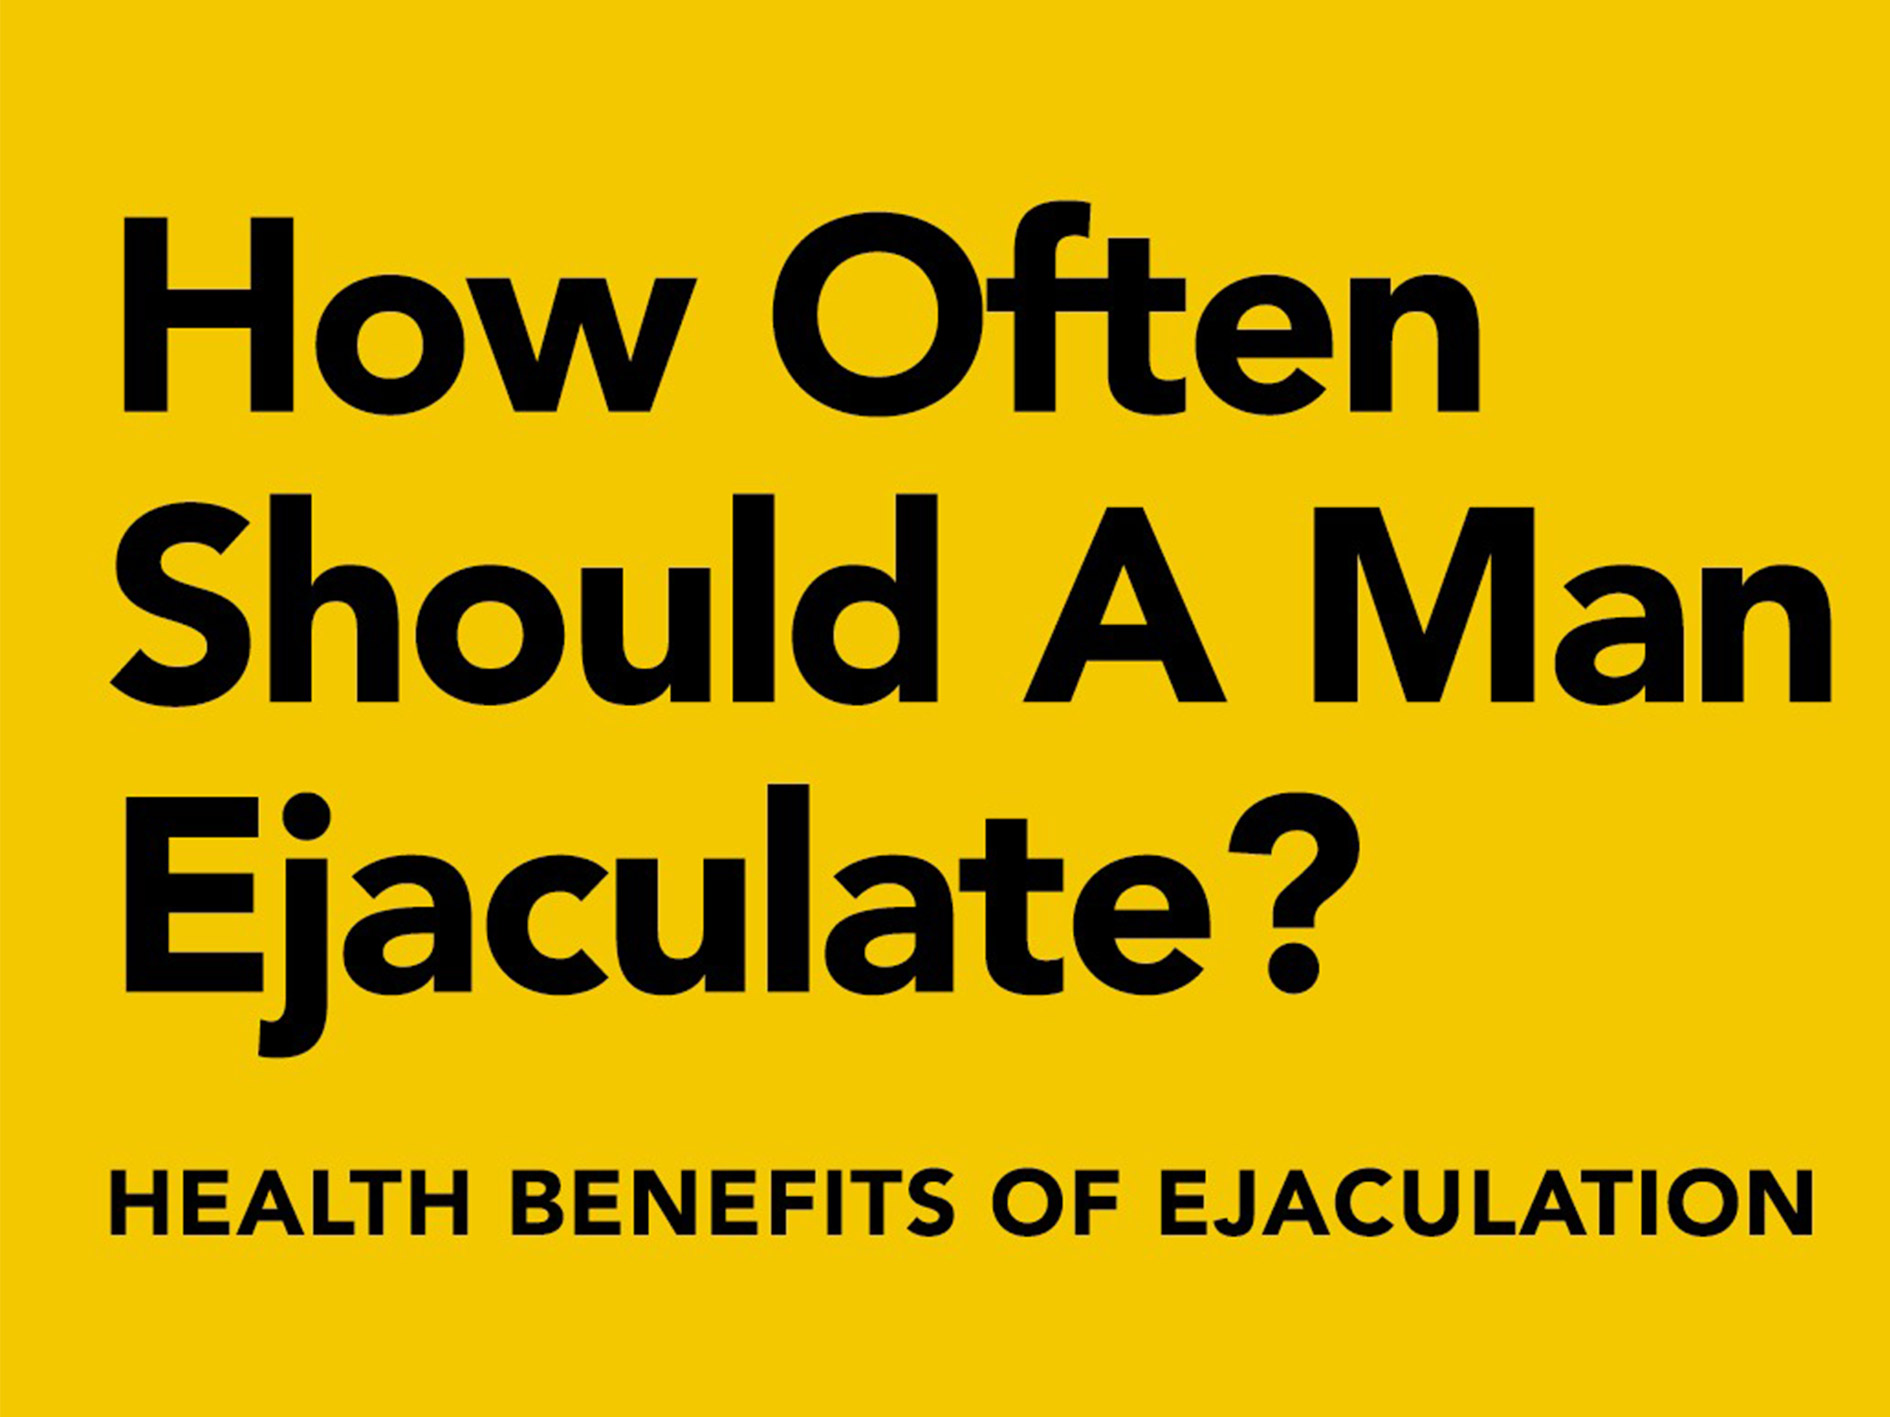 How Often Should a Man Ejaculate: Health Benefits of Ejaculation